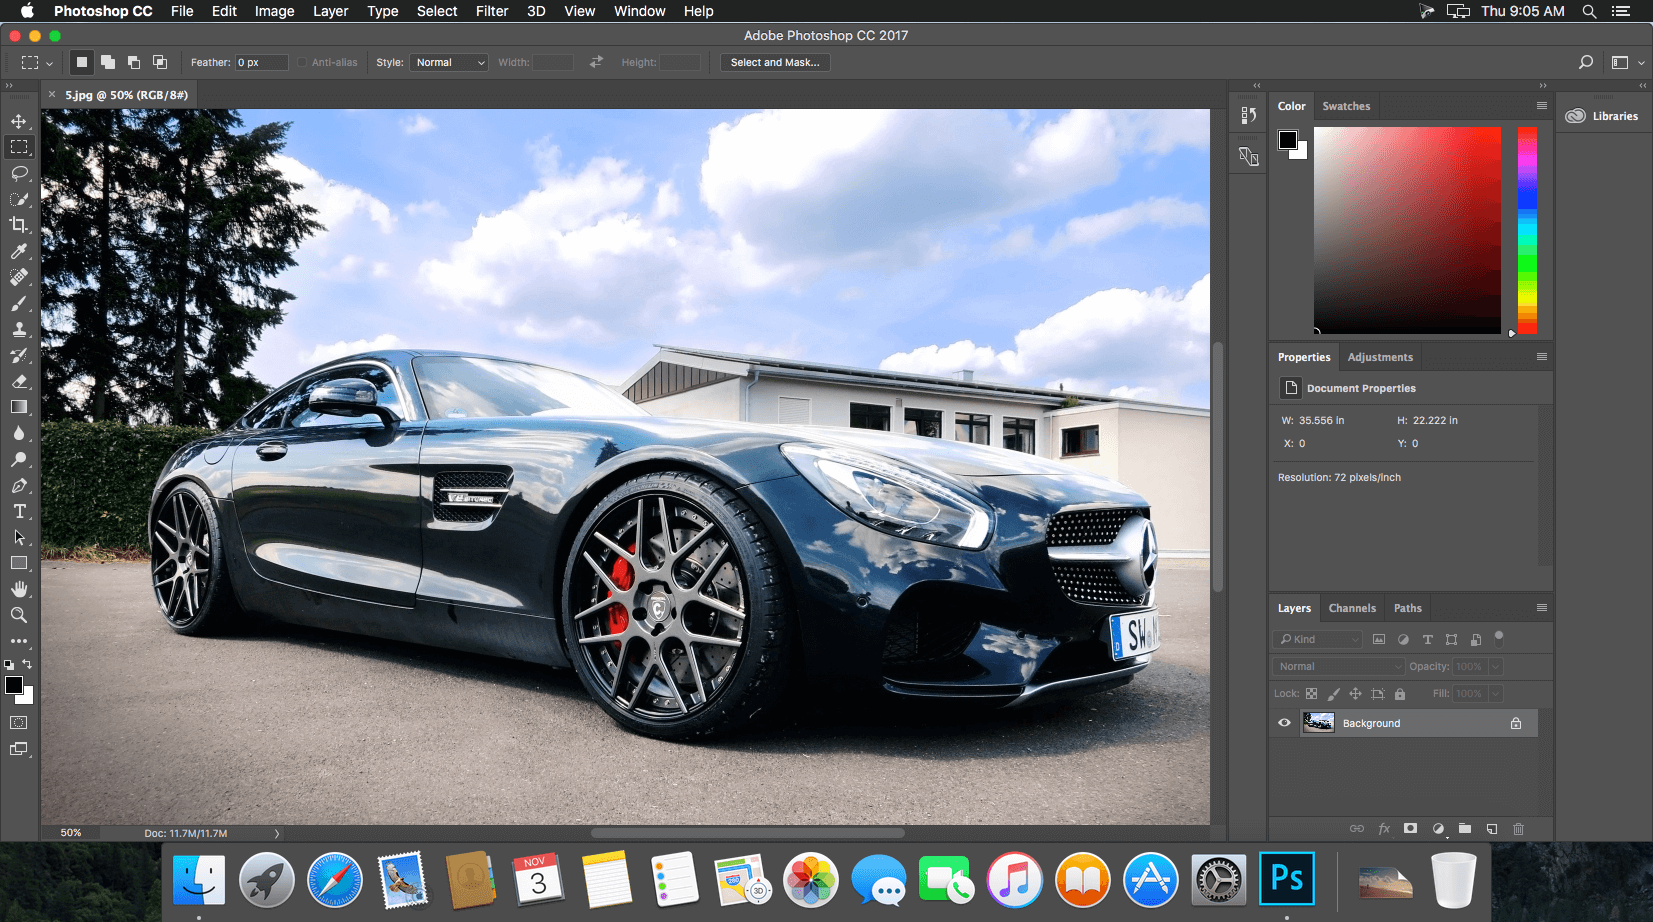 Adobe Photoshop CC 2017.1.1 (18.1.1) download | macOS